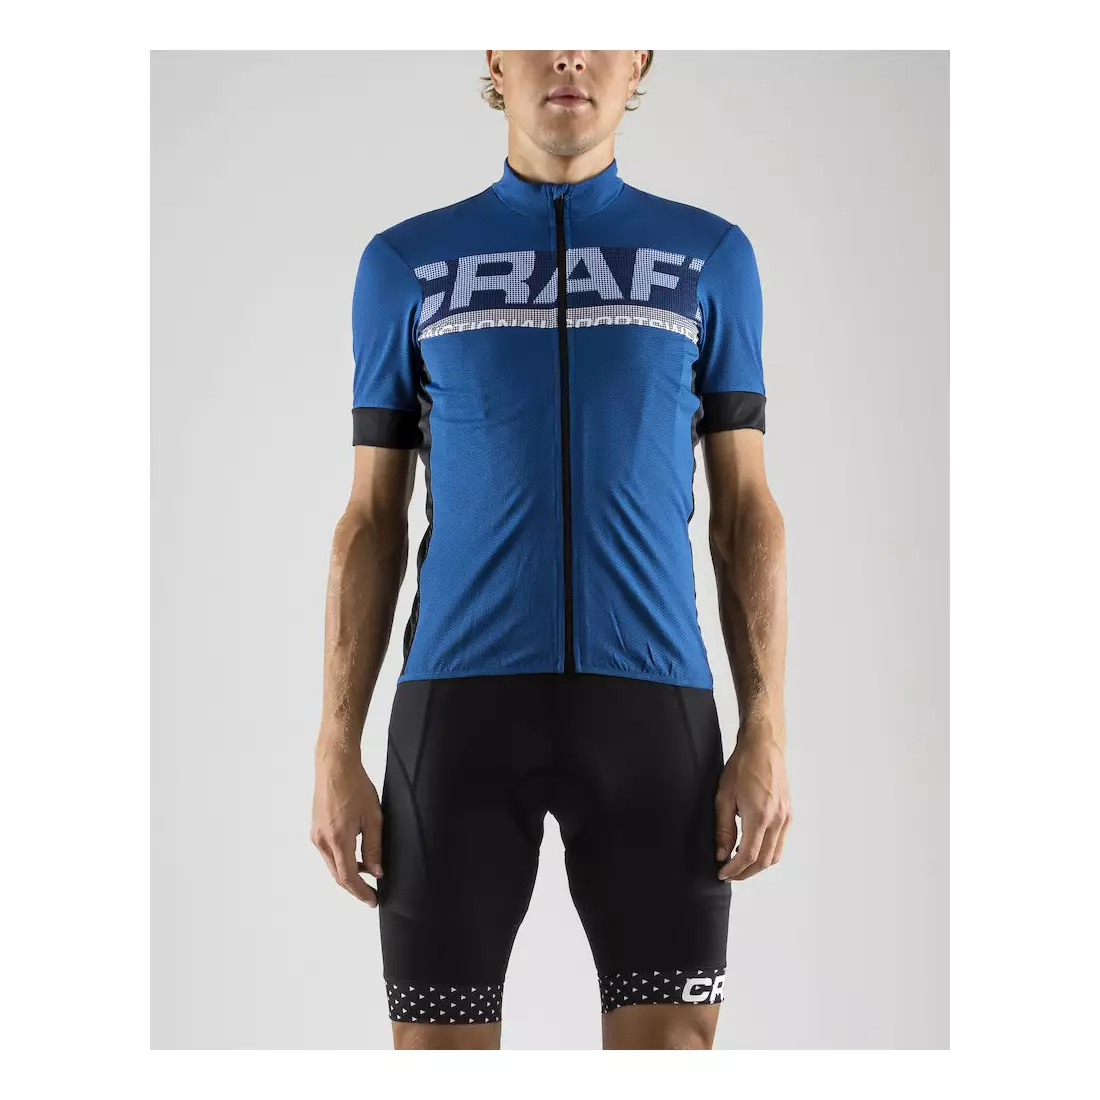 CRAFT REEL men's cycling jersey, blue 1906096-367999